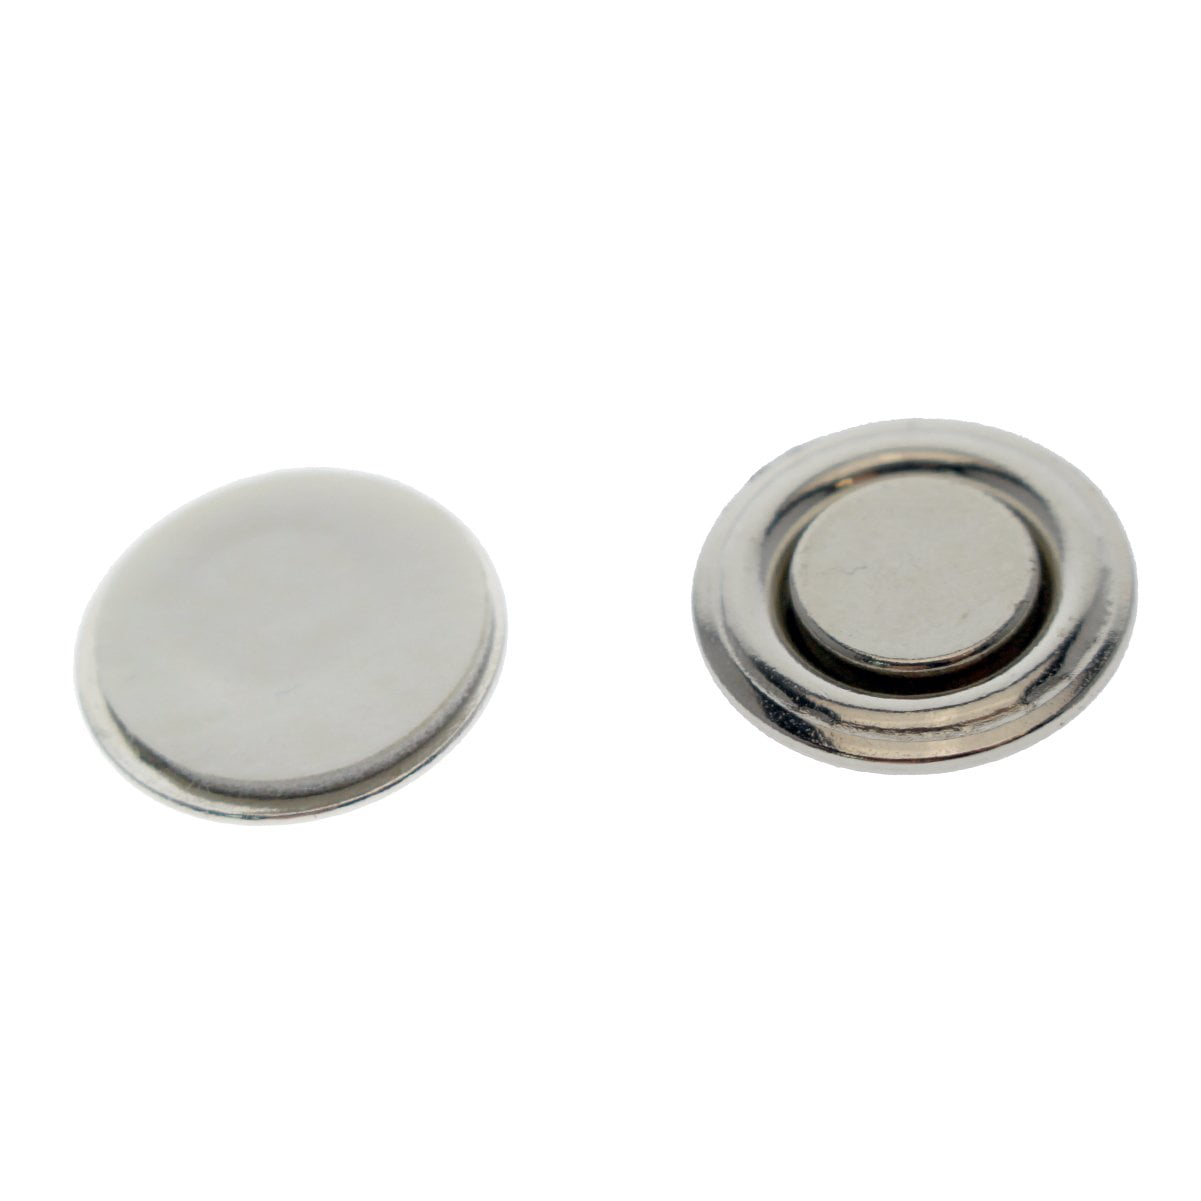 10 pcs Neodymium name badge magnetic back holder fastner pin magnets 